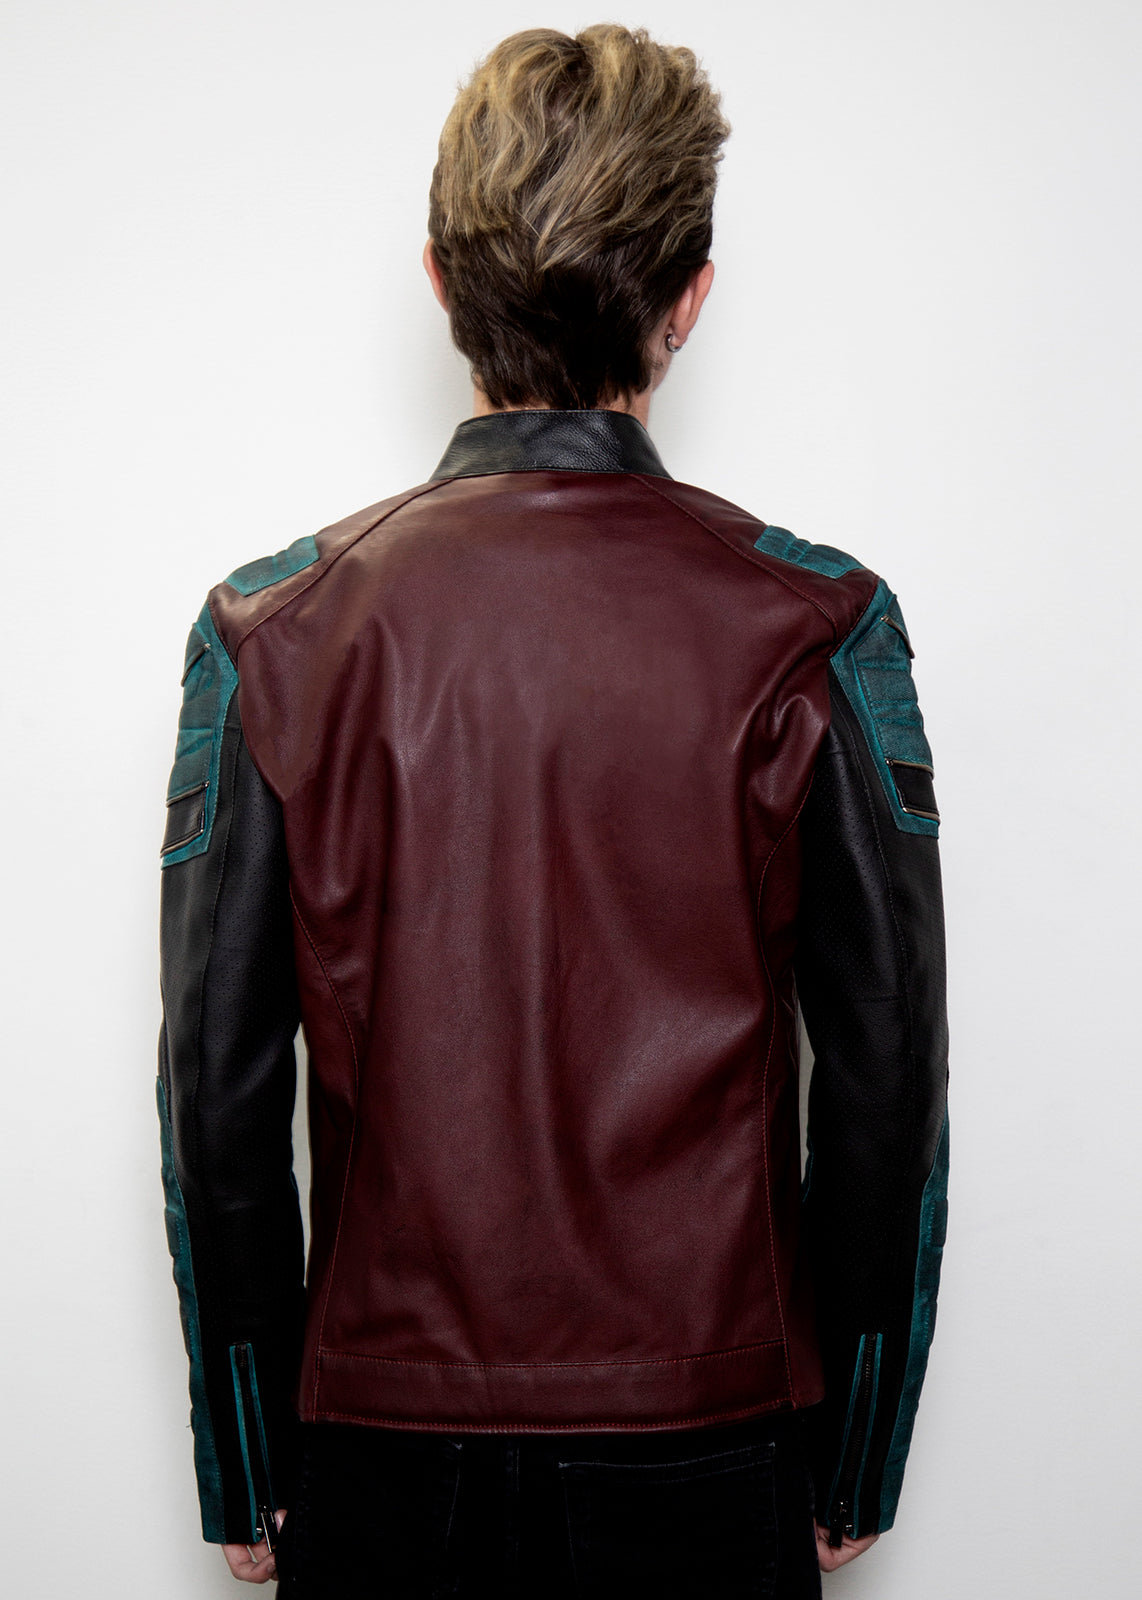 robin jason todd armor titans leather jacket